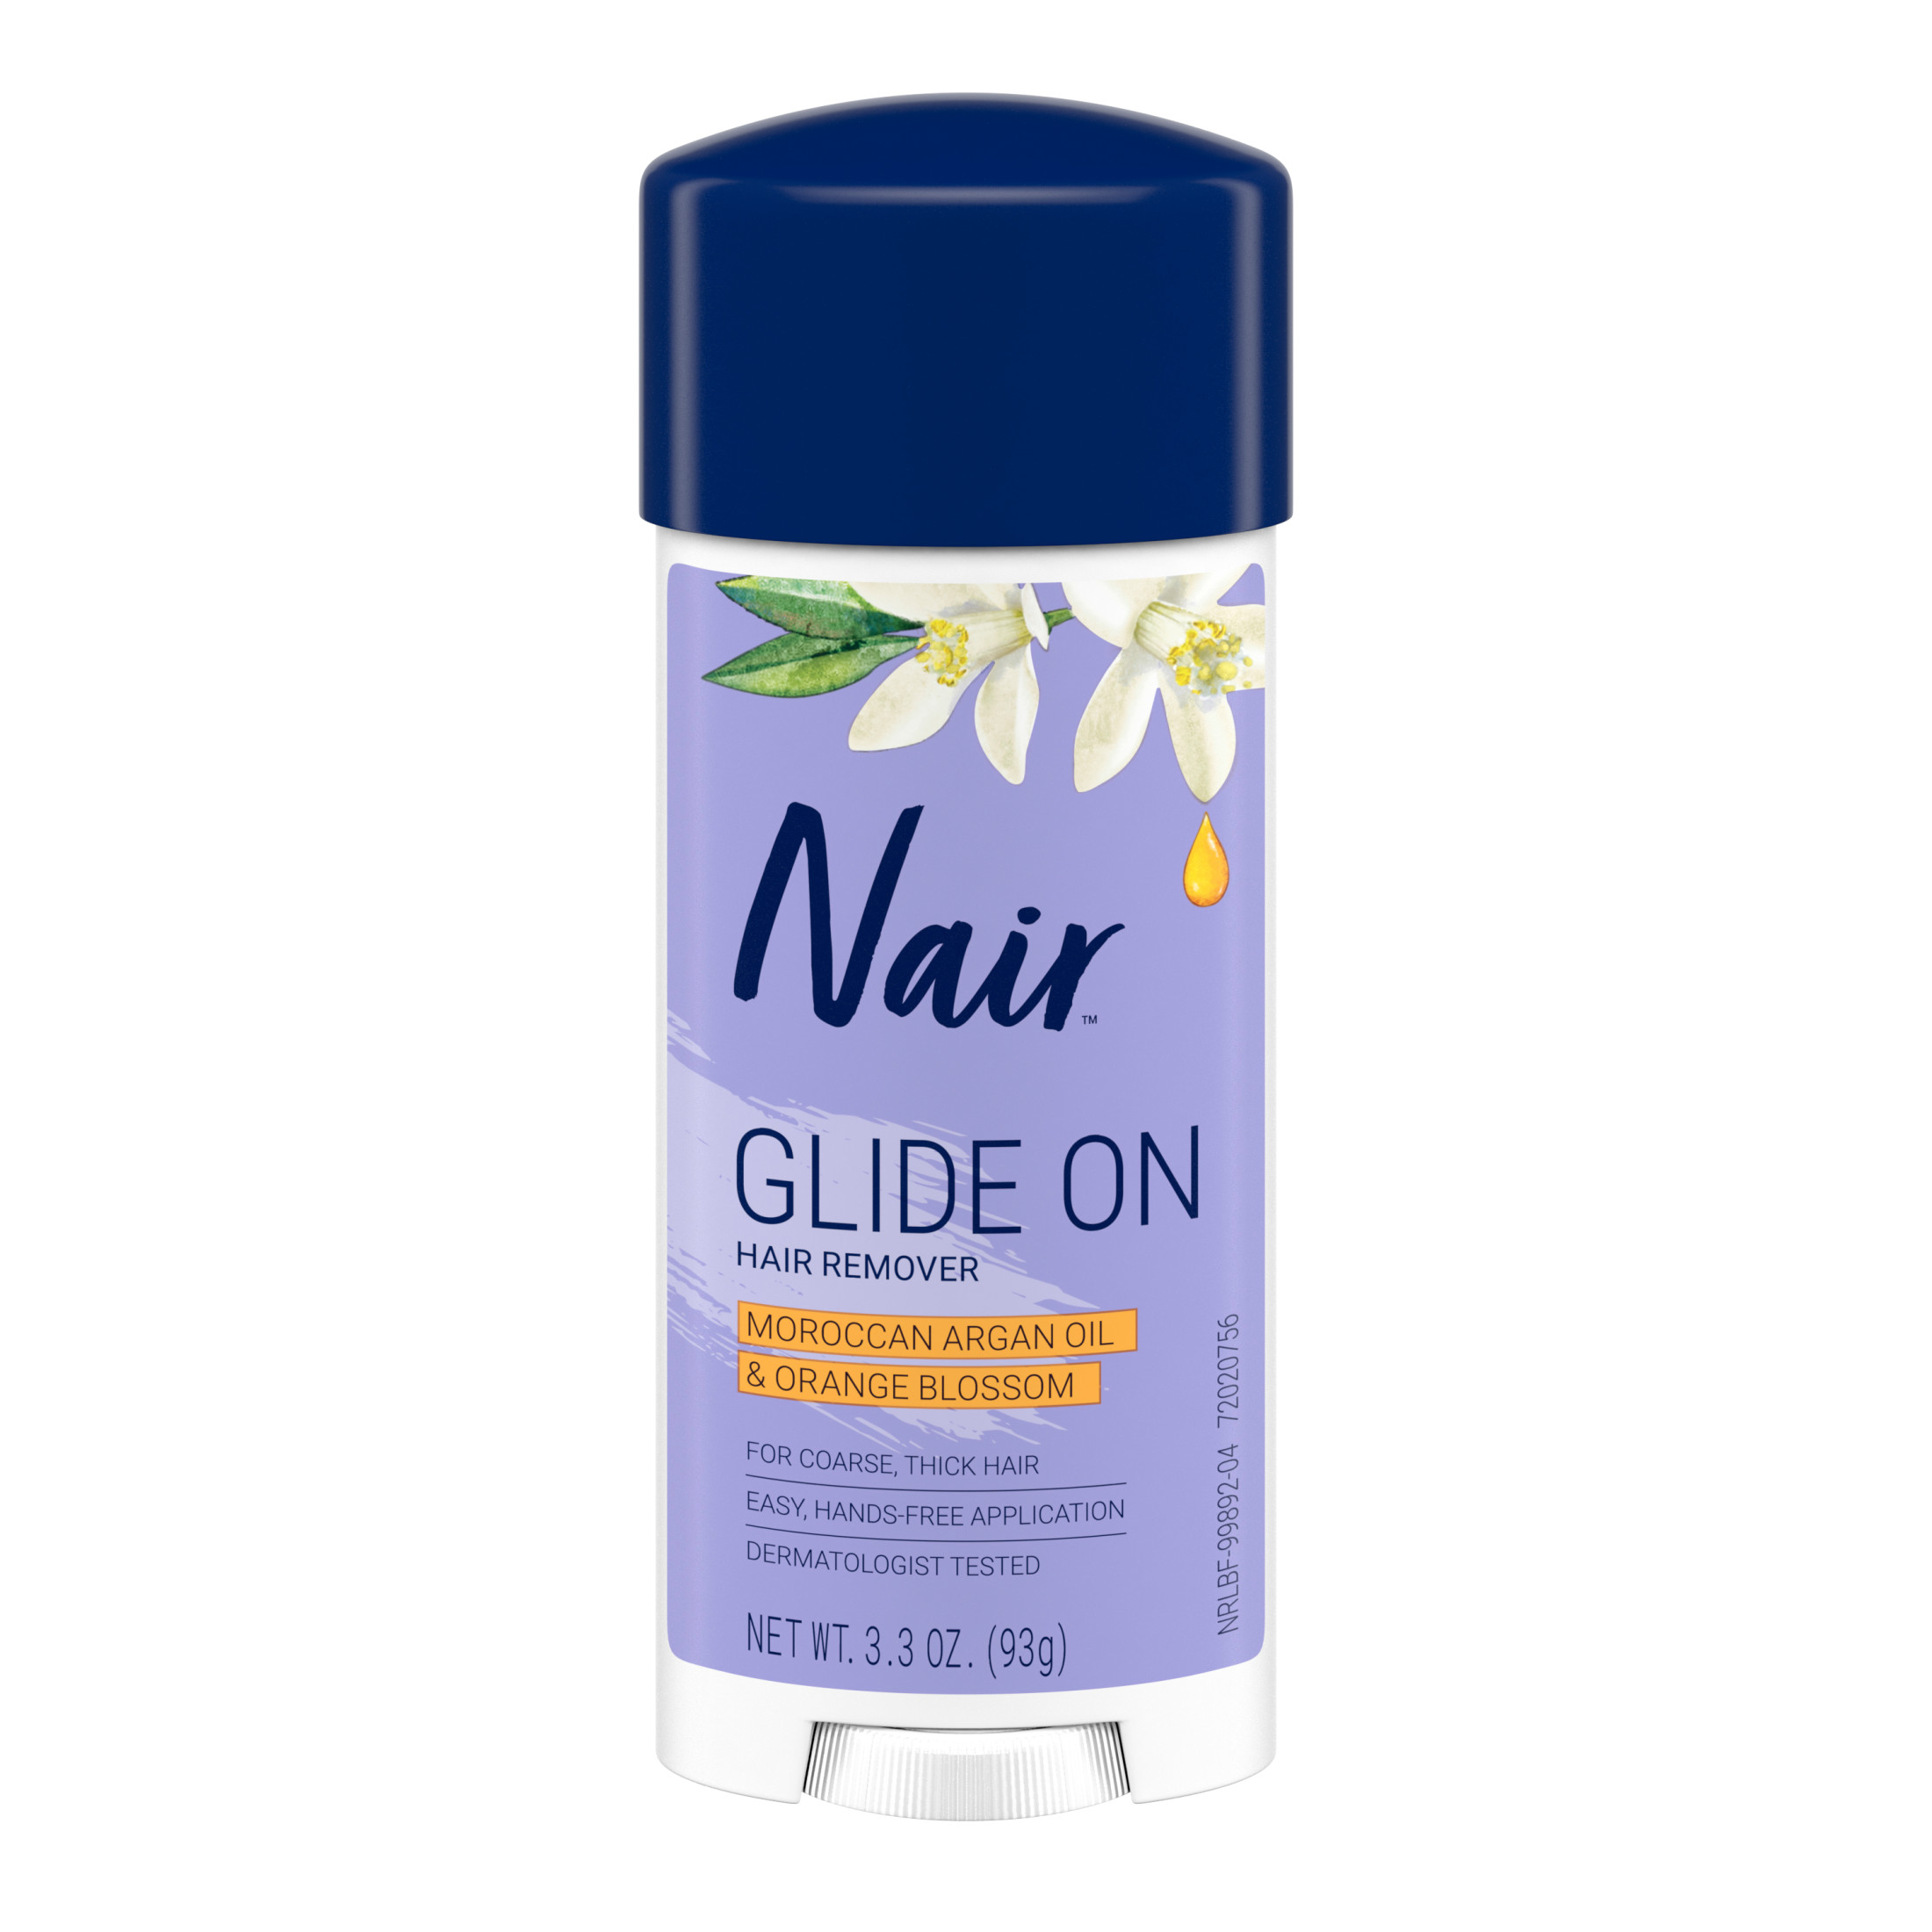 Nair Glide On Hair Removal Cream, Arm, Leg, and Bikini Hair Remover, Depilatory Cream, 3.3 oz Stick - image 1 of 8